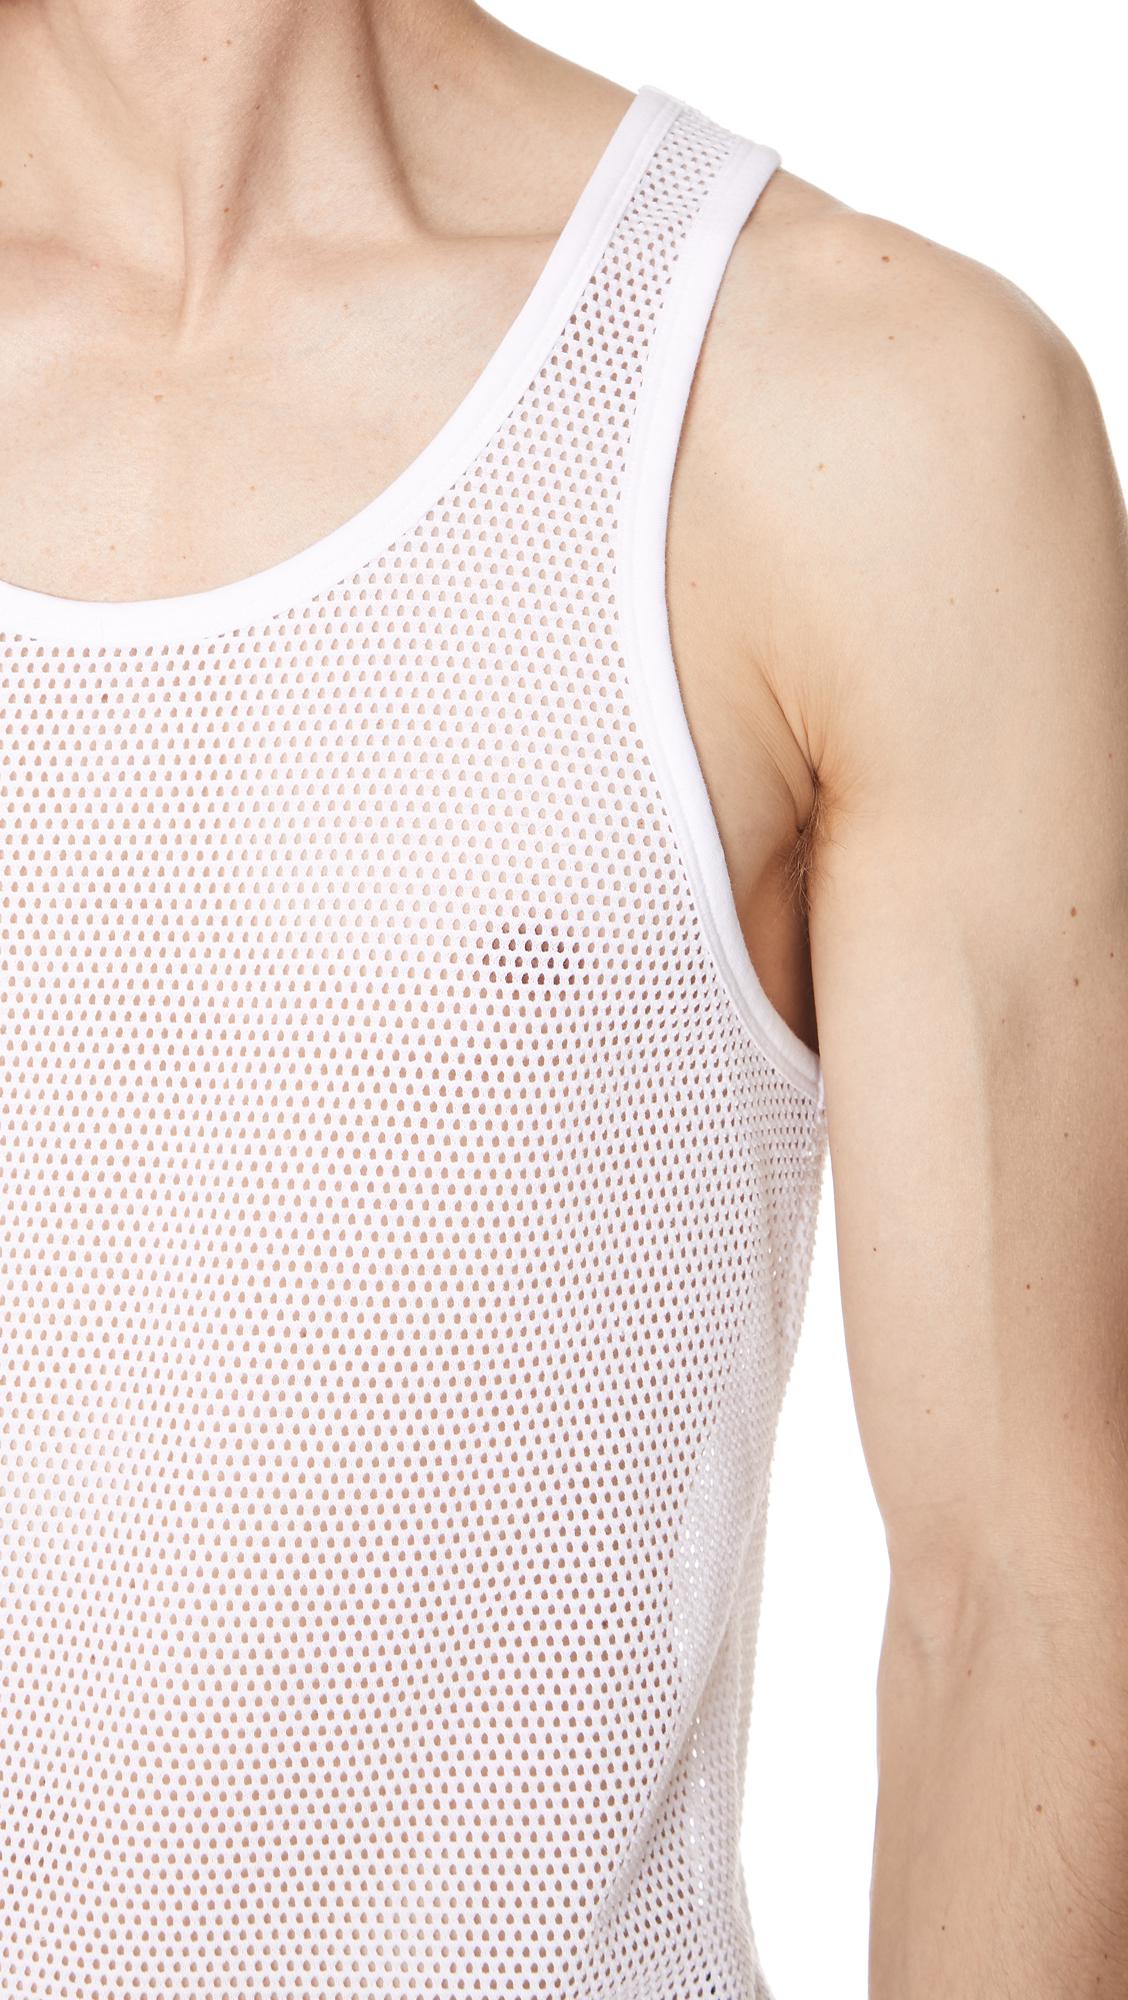 Calvin Klein Synthetic Body Mesh Tank in White for Men - Lyst